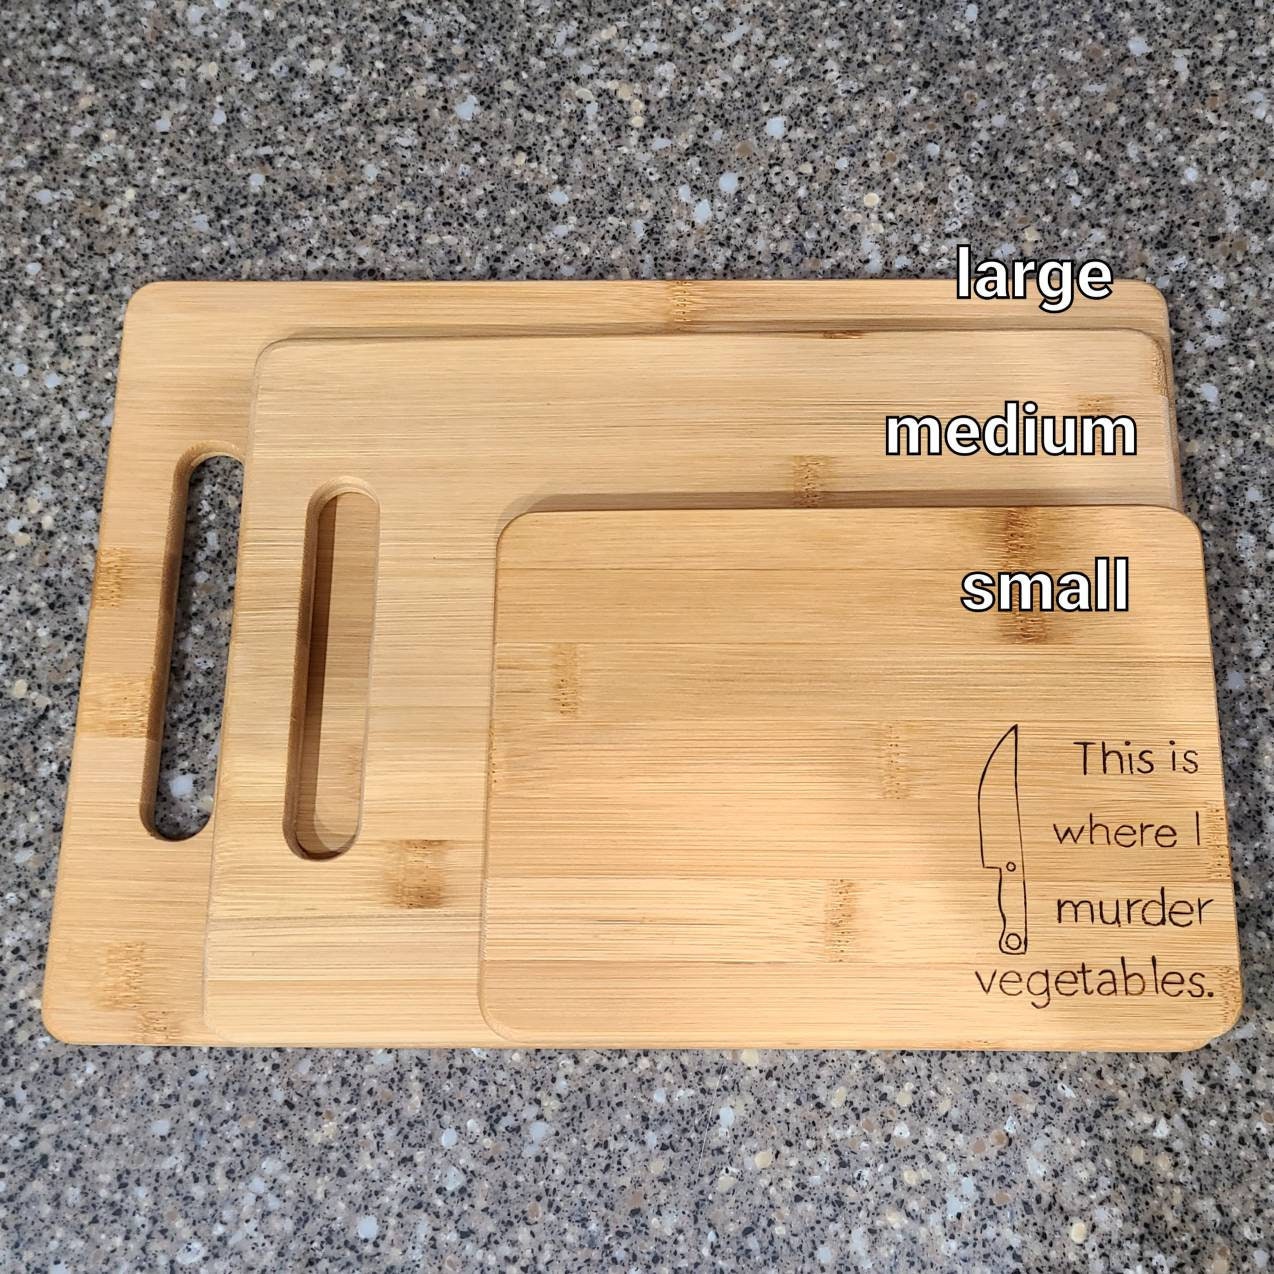 Turnip the Beat Bamboo Cutting Board, Custom Bamboo Cutting Board,  Vegetable Pun Cutting Board, Funny Cutting Board, Punny Kitchen 